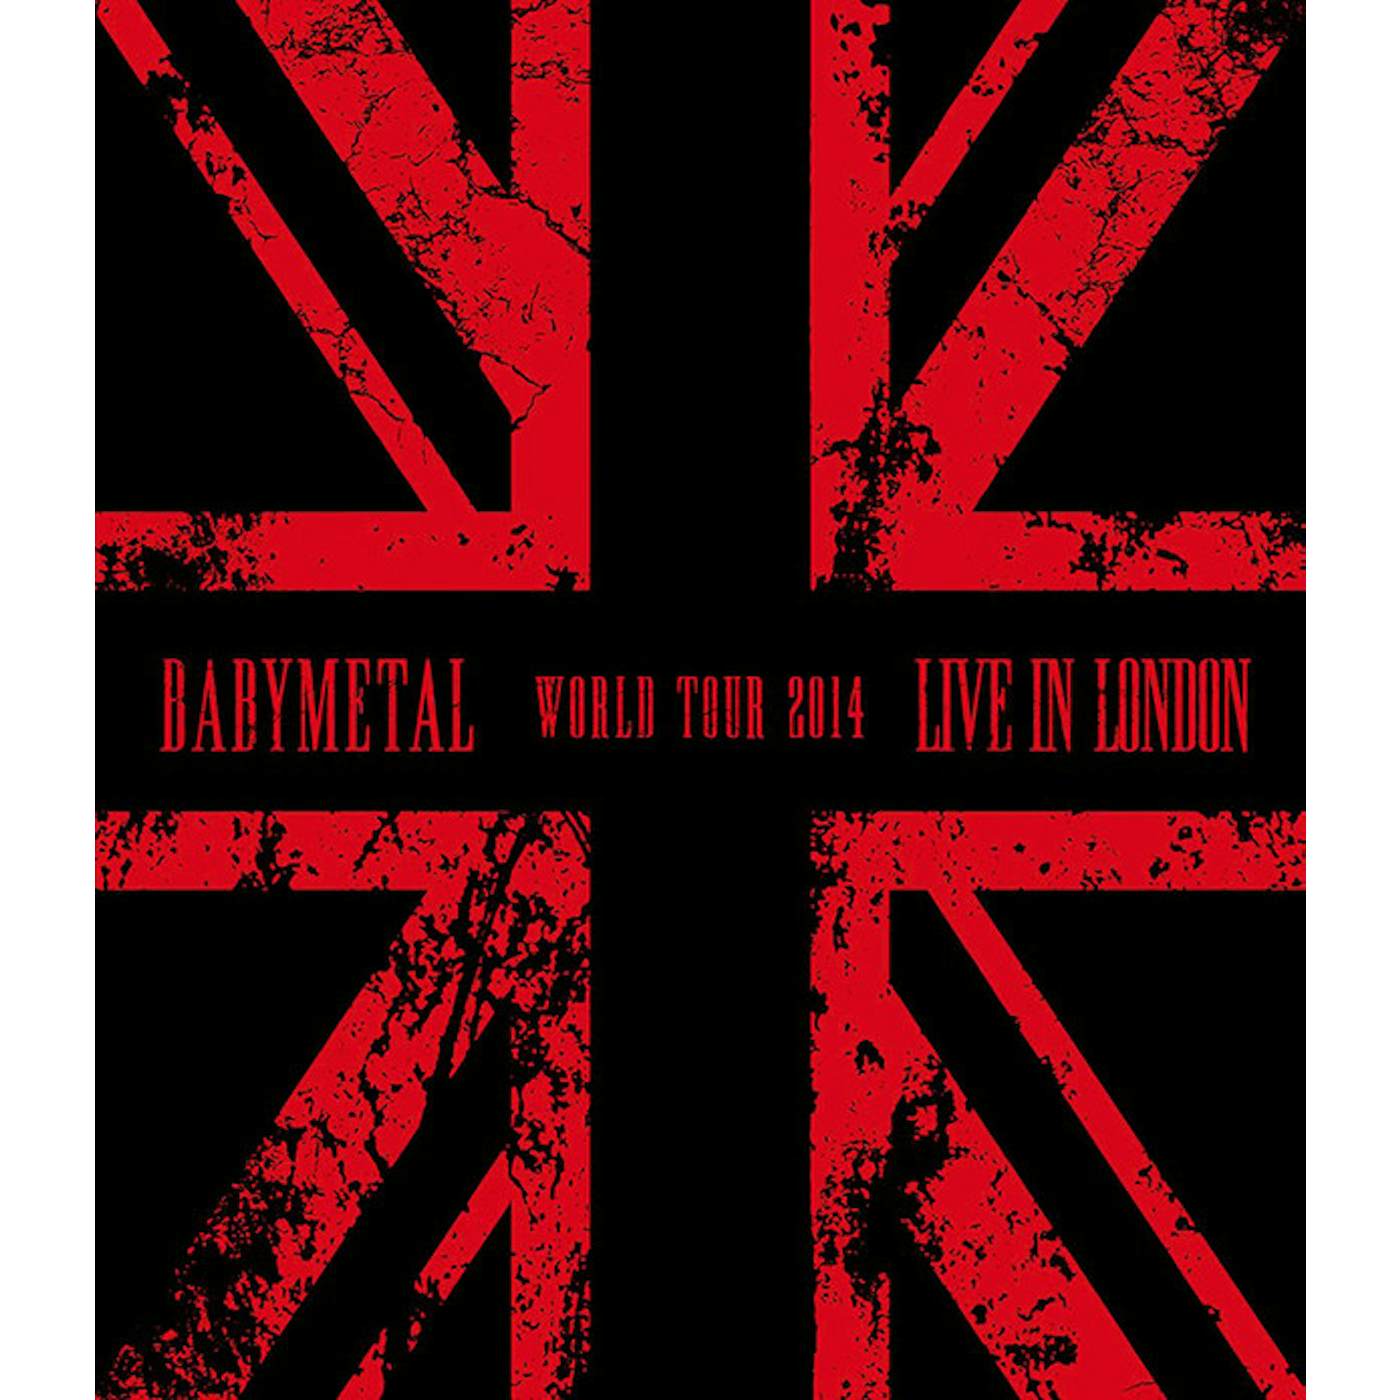 LIVE IN LONDON (BABYMETAL WORLD TOUR 2014) Vinyl Record